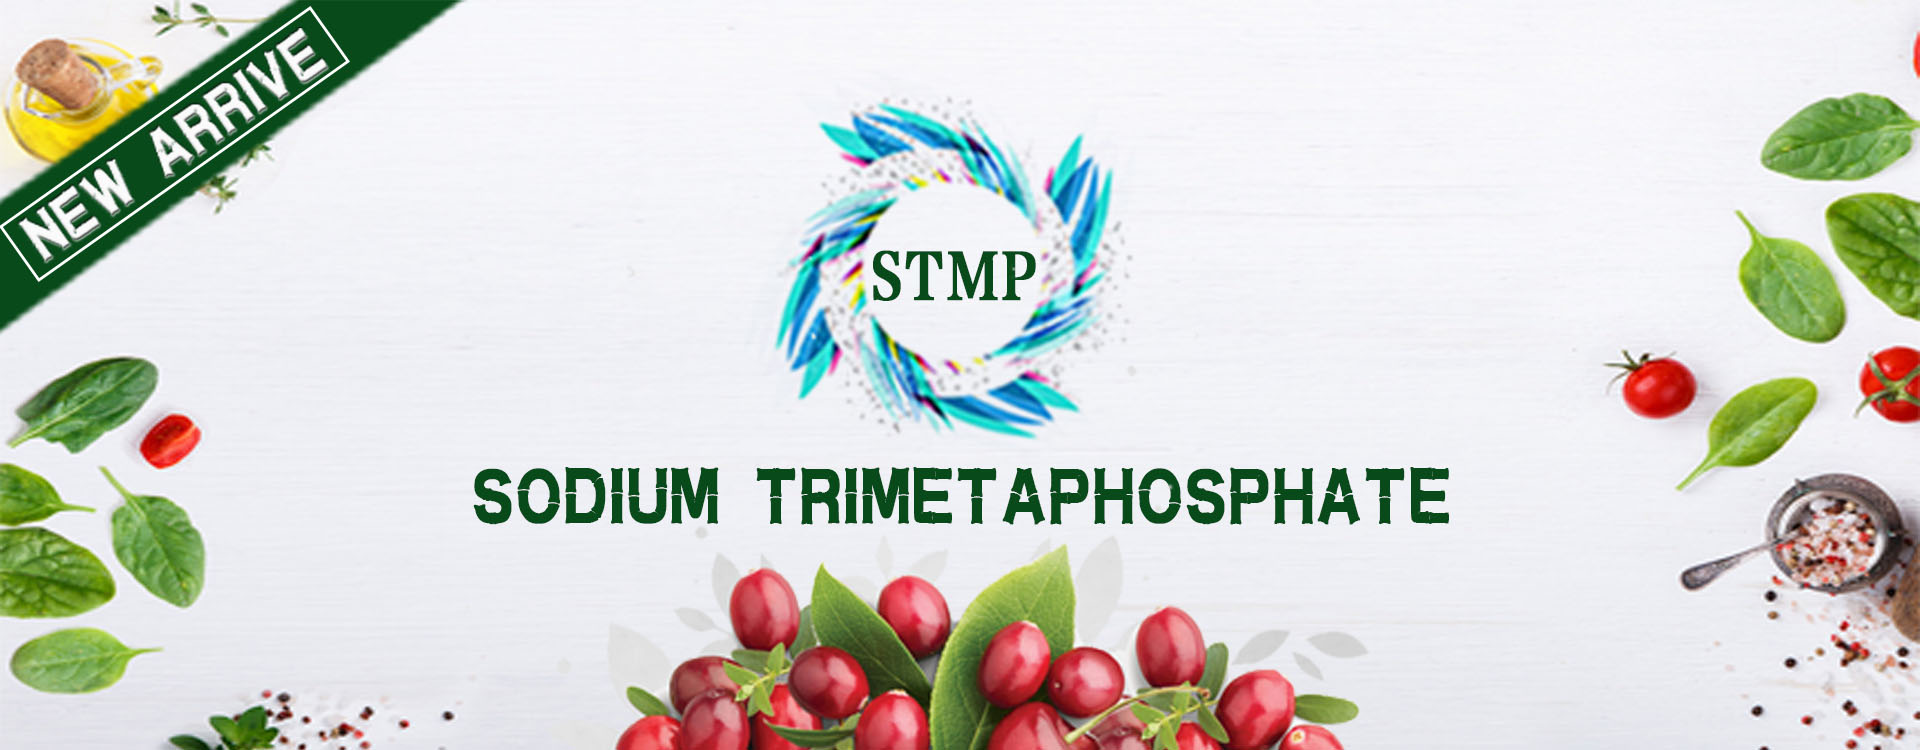 Sodium Trimetaphosphate(STMP)